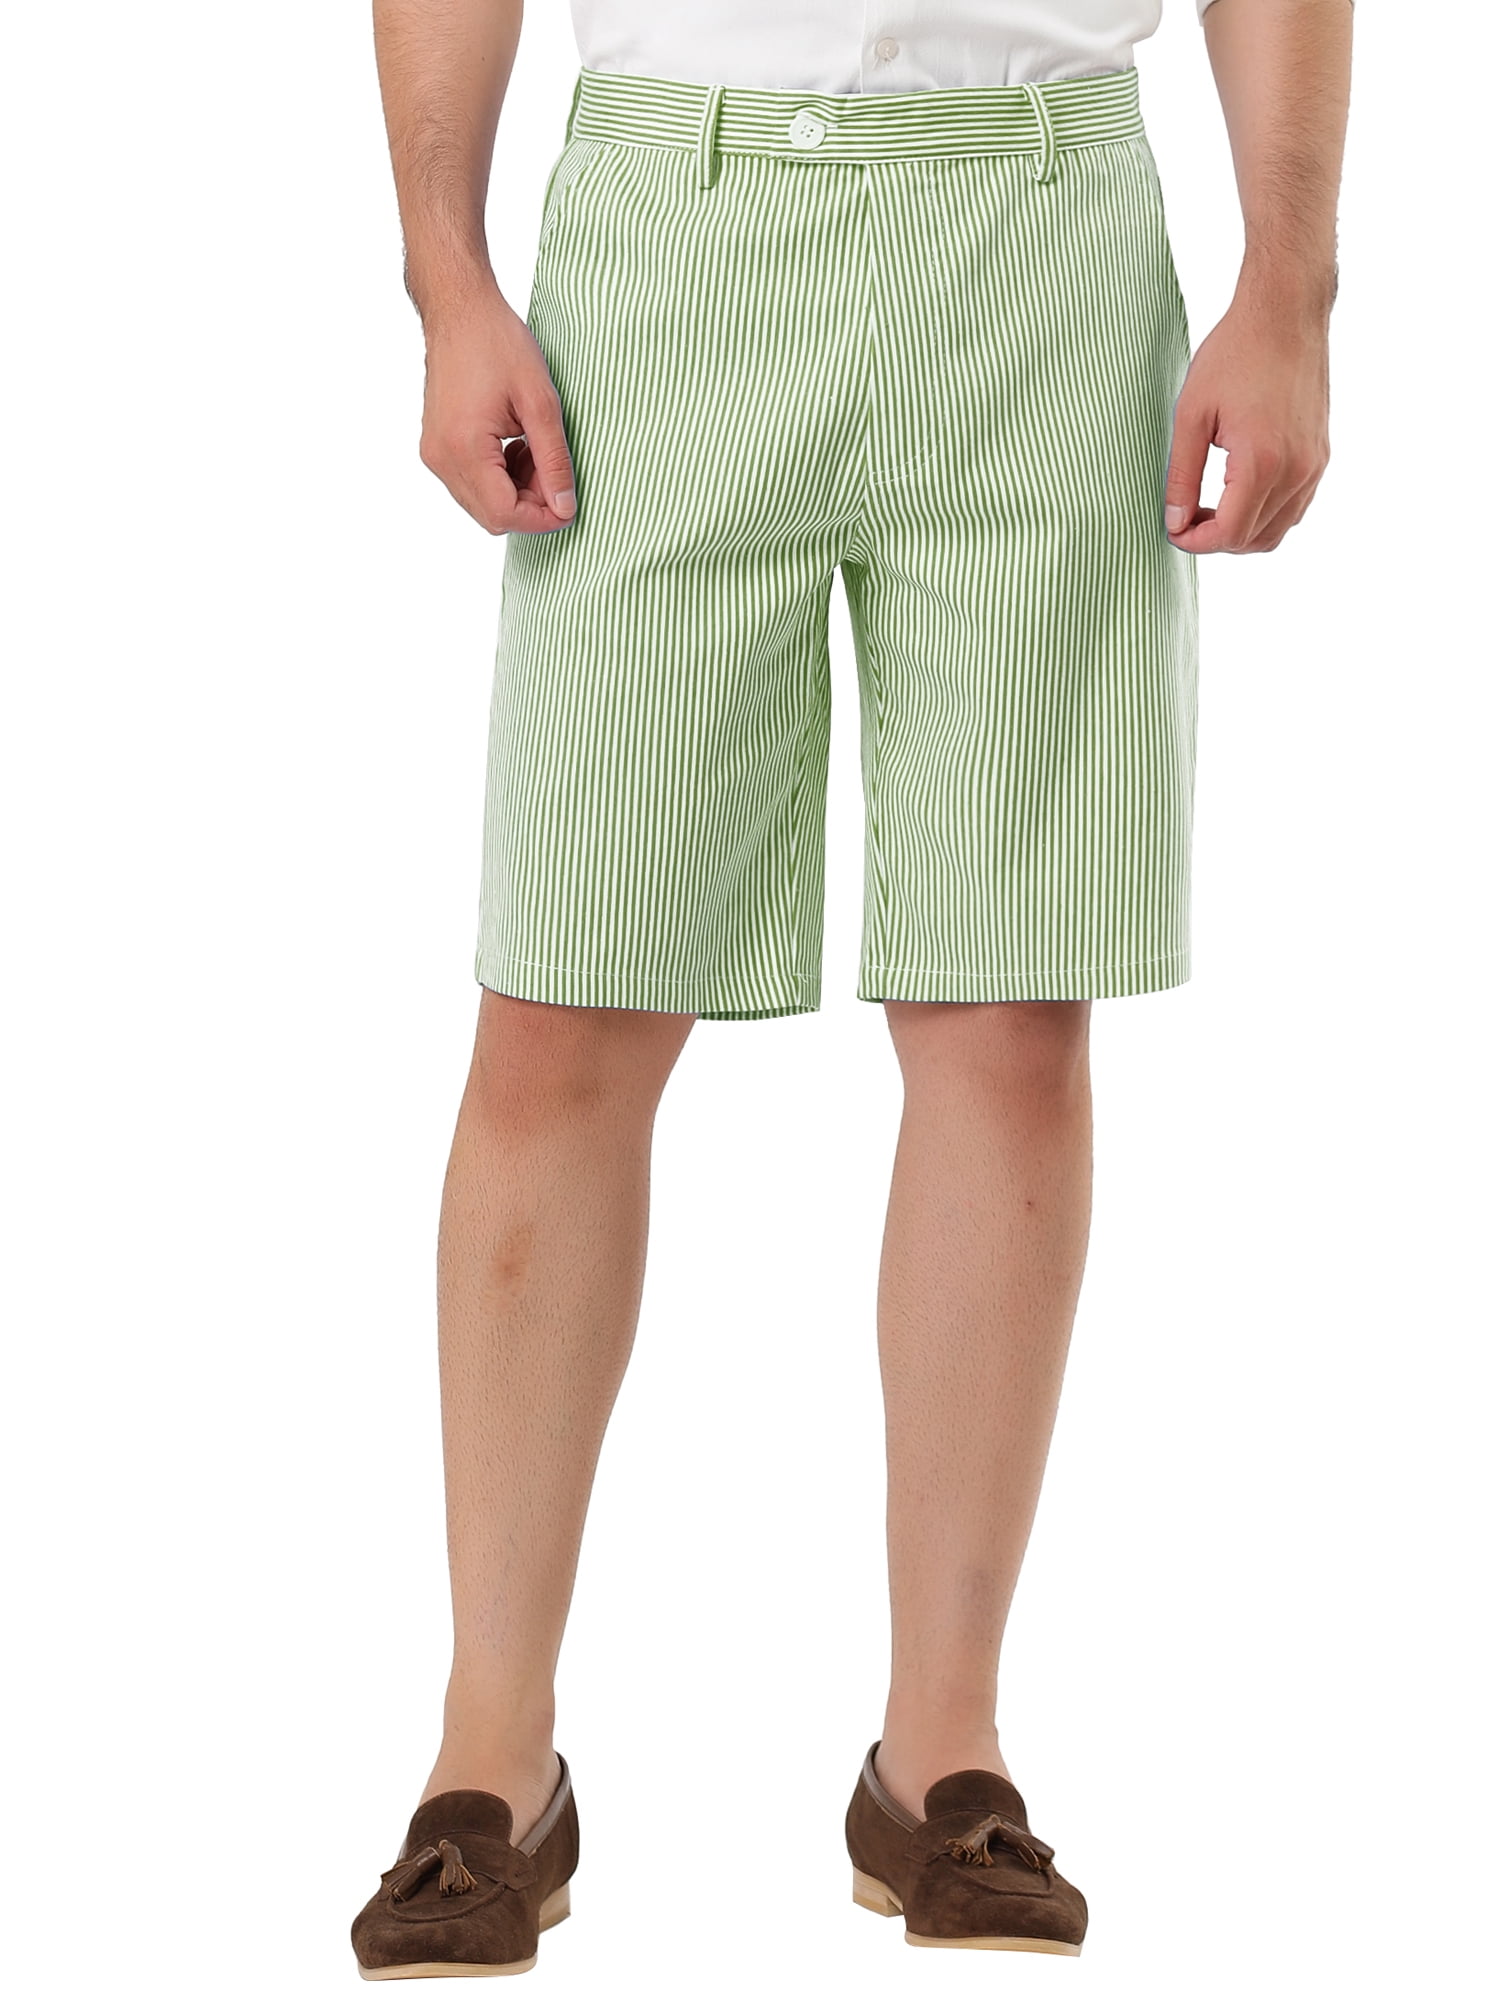 uxcell Men's Summer Shorts Stripe Slim Fit Flat Front Seersucker Chino Short Pants 